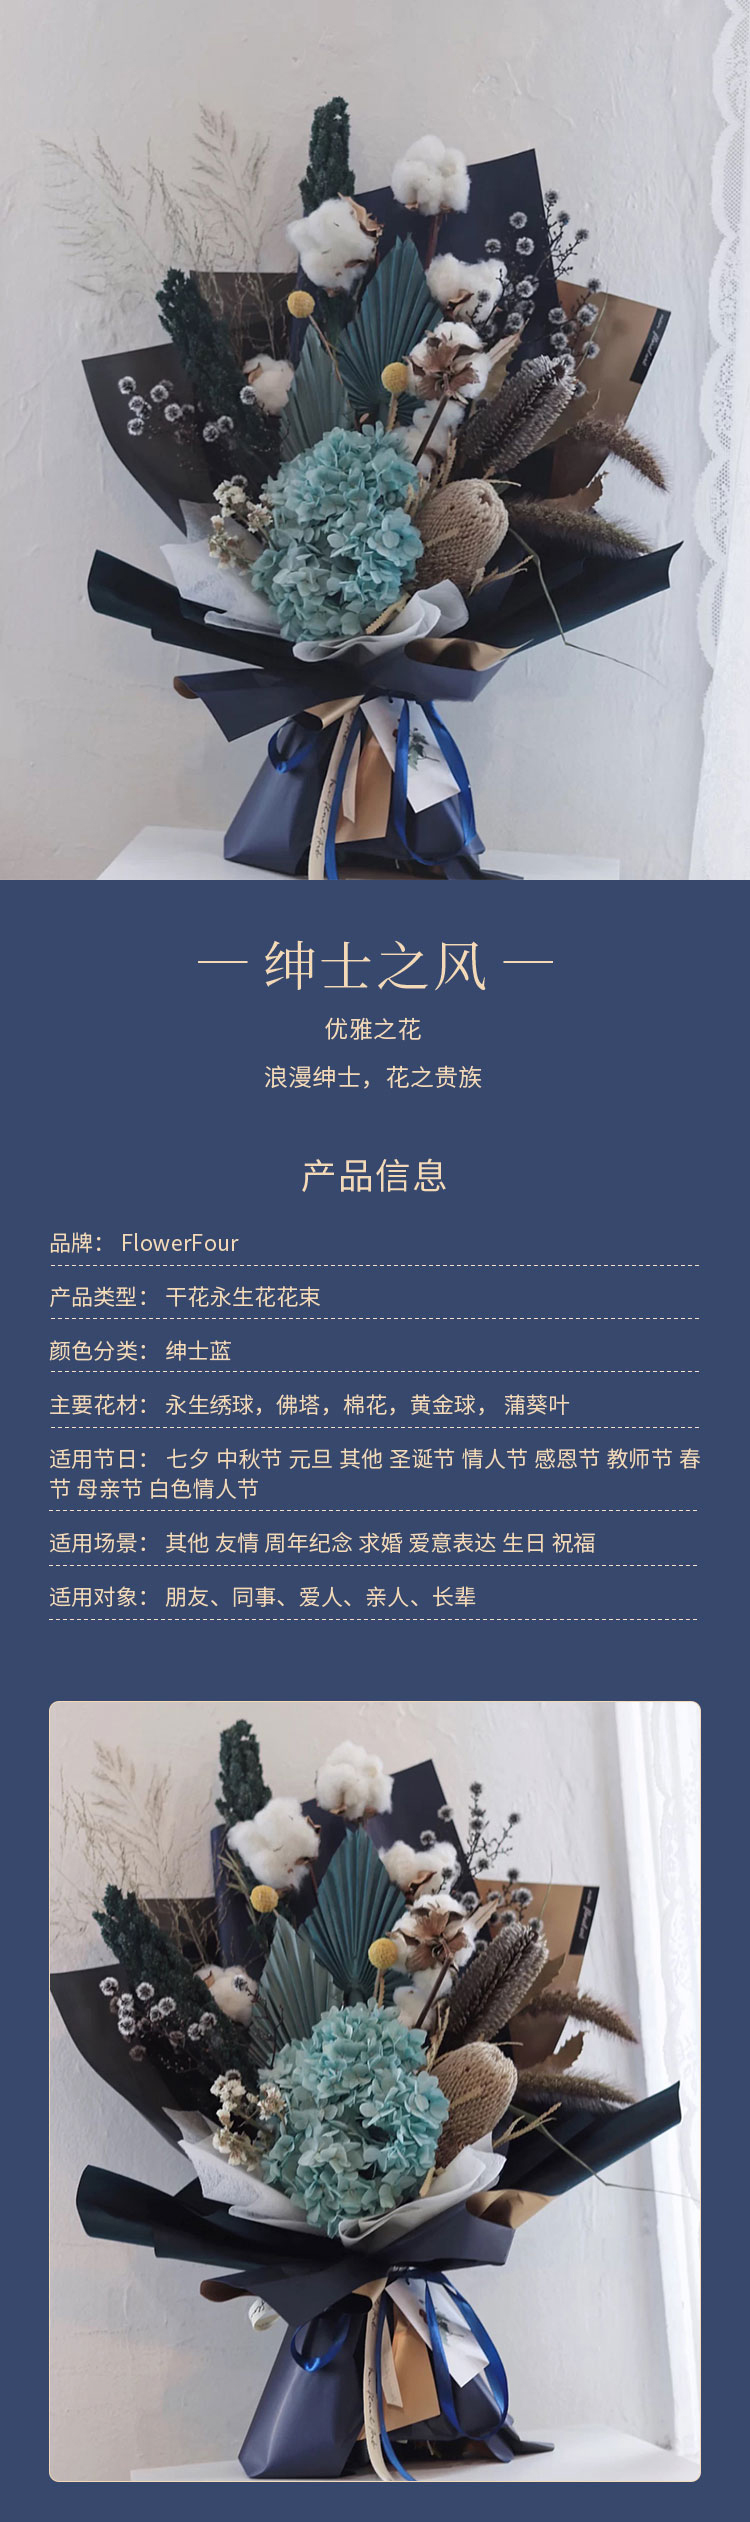 FlowerFour/FlowerFour 干花永生花花束 绅士蓝 生日纪念日节日花束